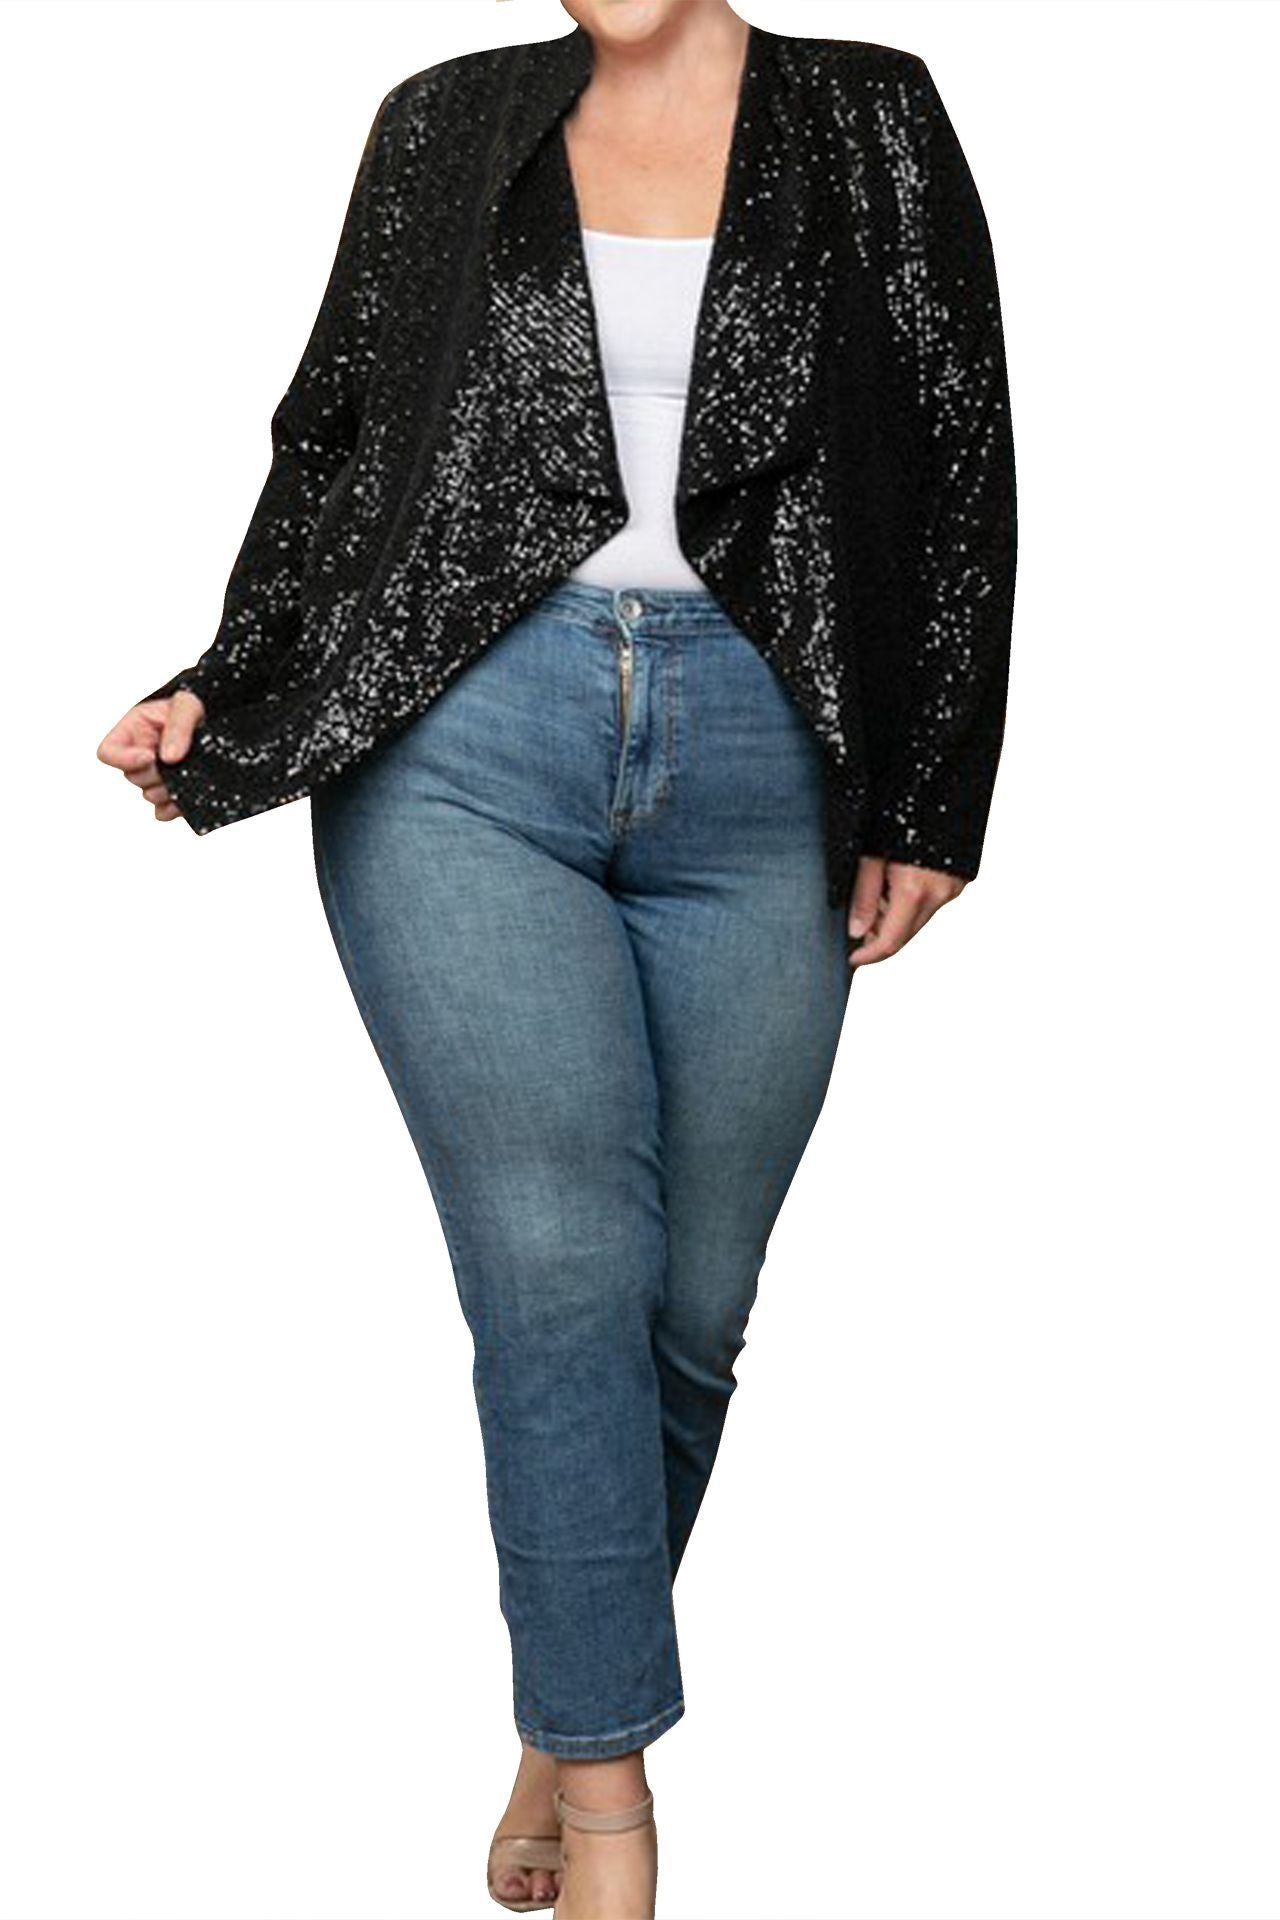 "sequin jacket women" "womens plus size sequin jacket" "black sequin womens jacket" "Kyle X Shahida" "plus size sequin jacket women"